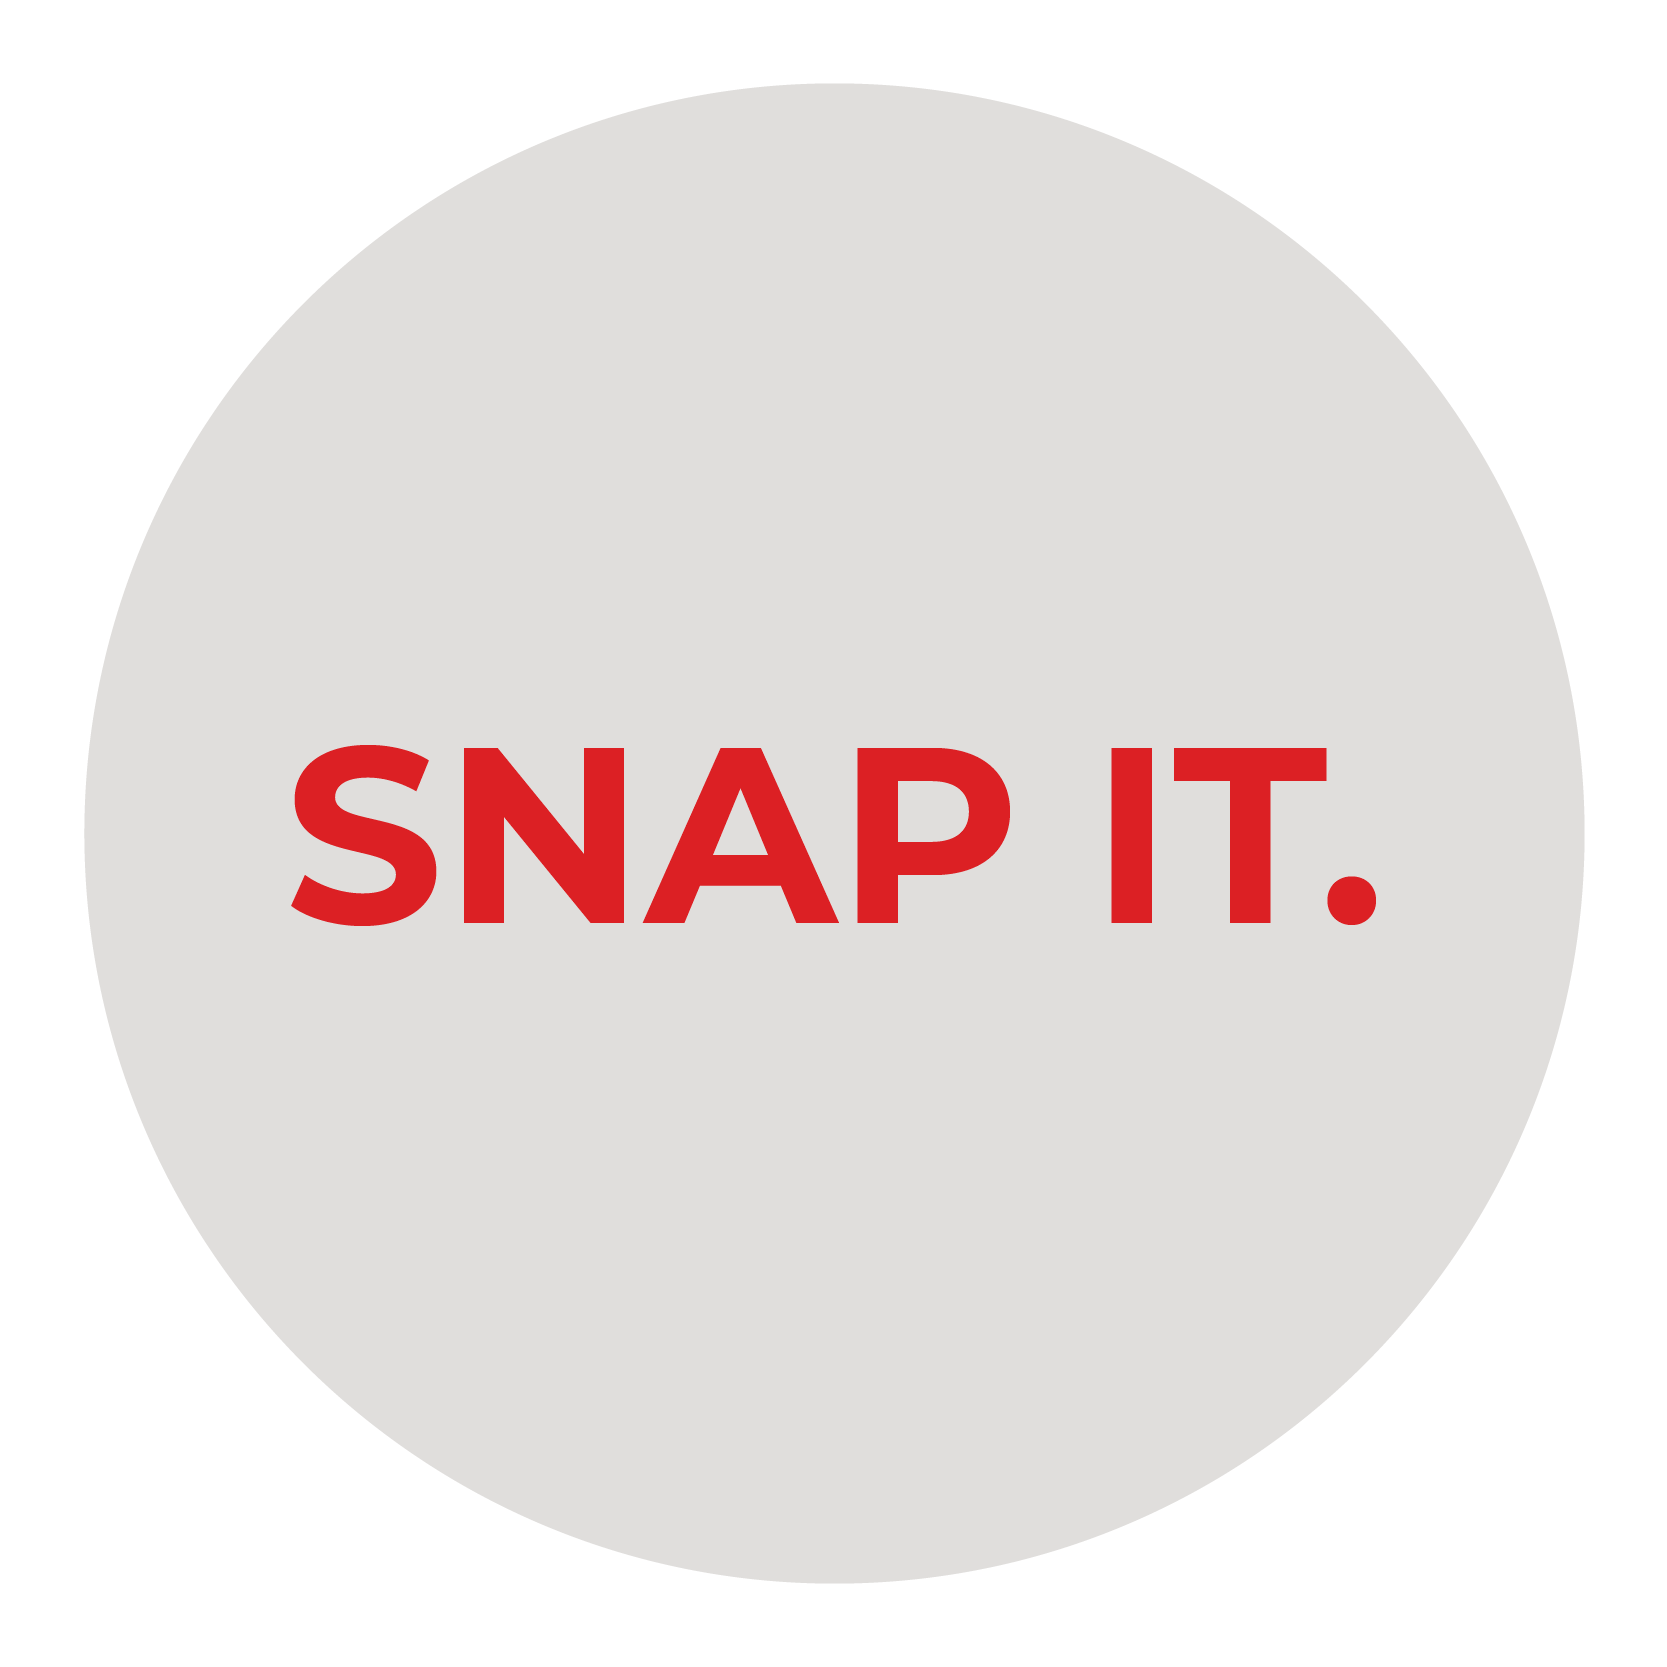 Snap it